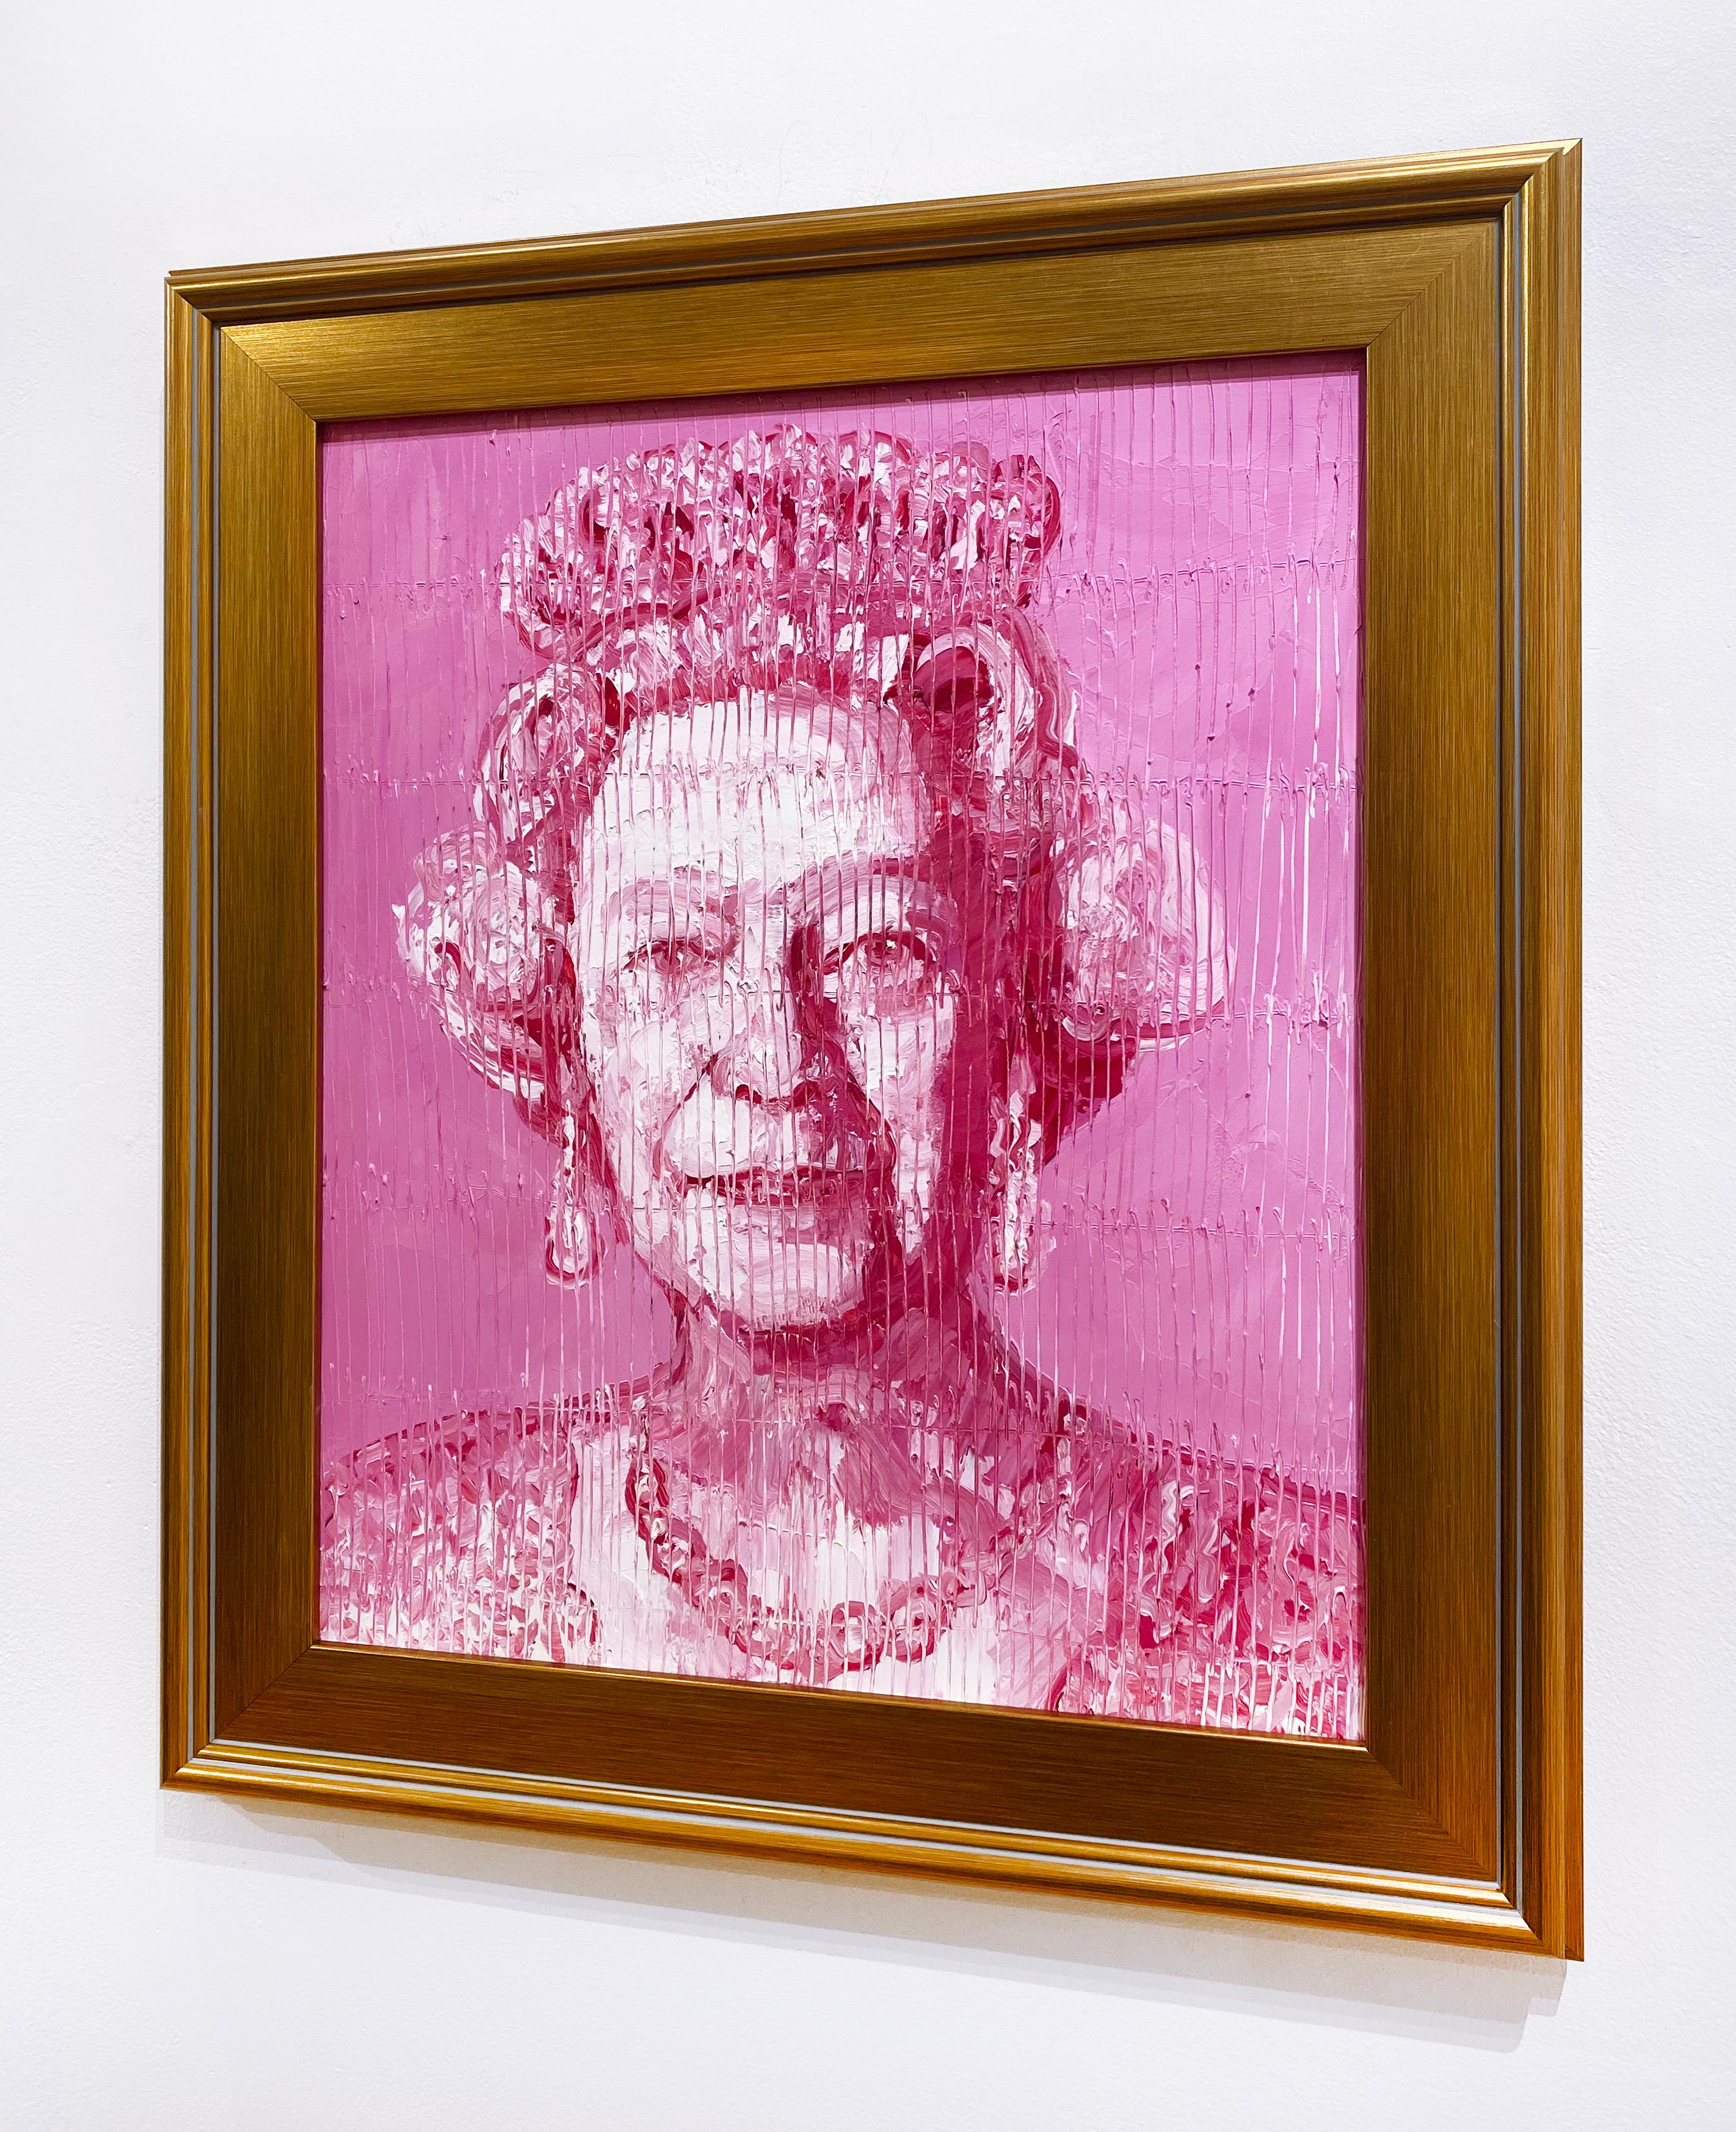 Her Majesty Queen Elizabeth - Brown Portrait Painting by Hunt Slonem